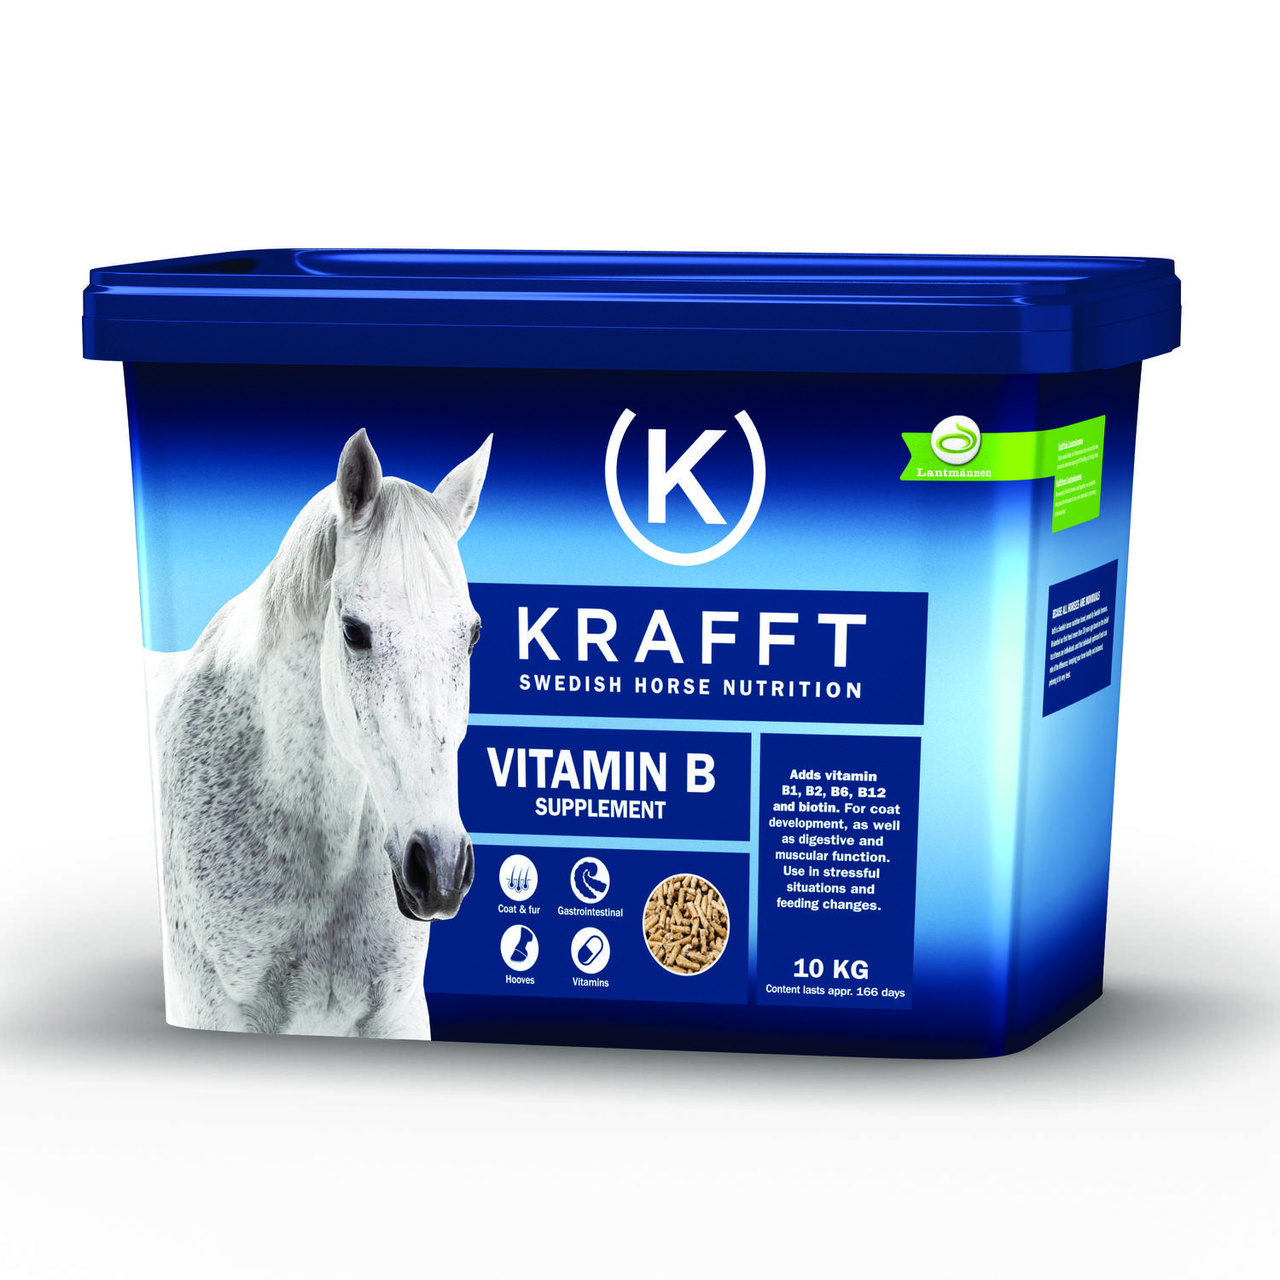 Krafft vitamin B 10 kg